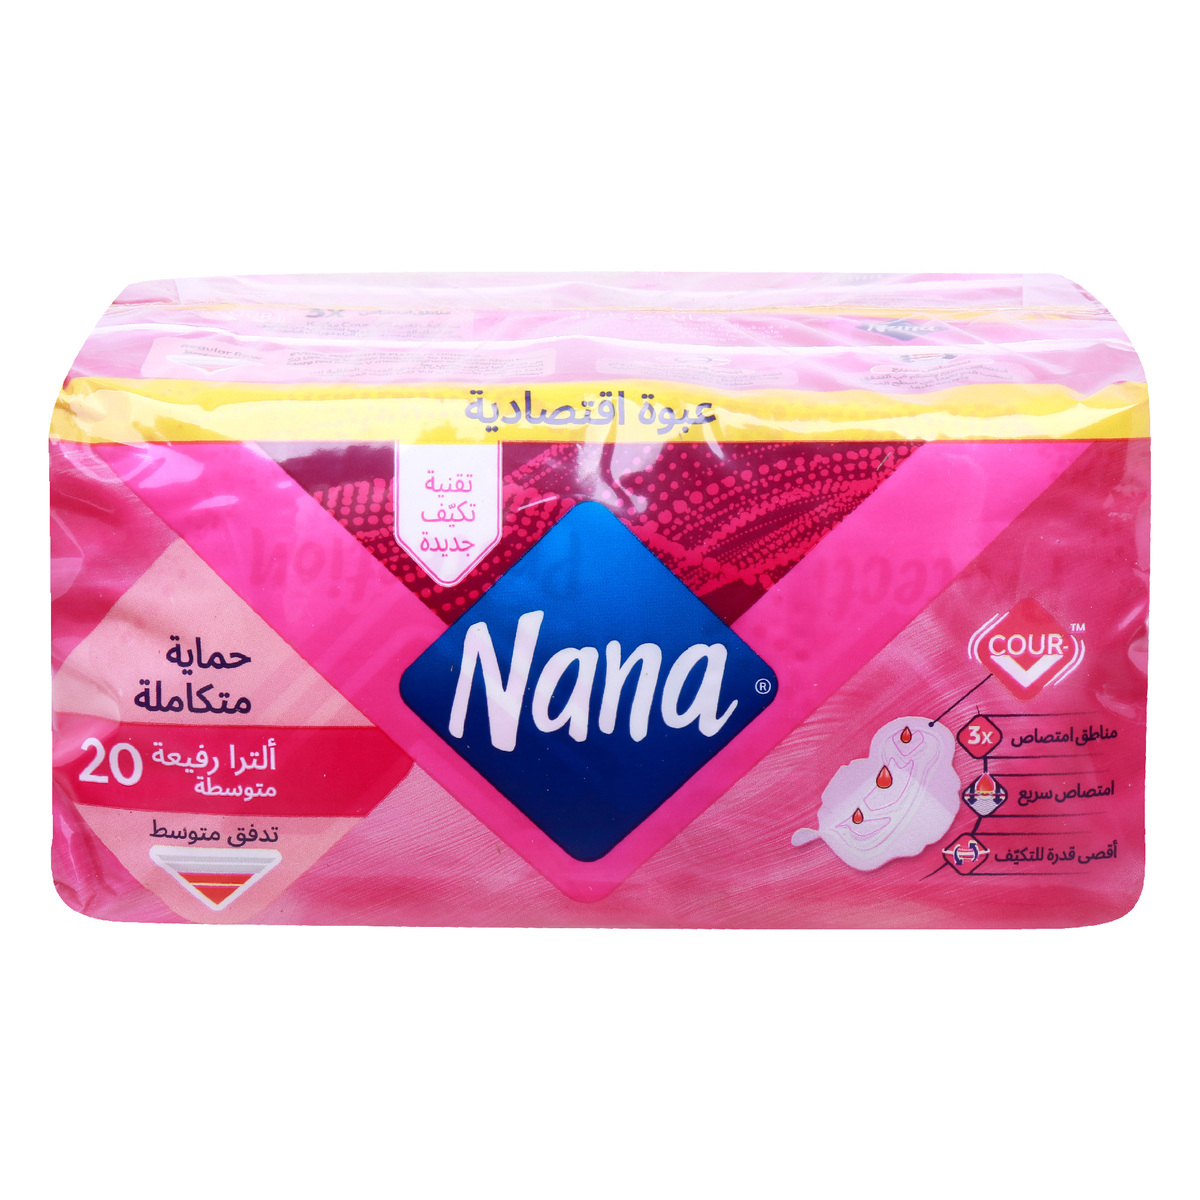 Nana Ultra Thin Regular Sanitary Pads Value Pack 2 x 20 pcs